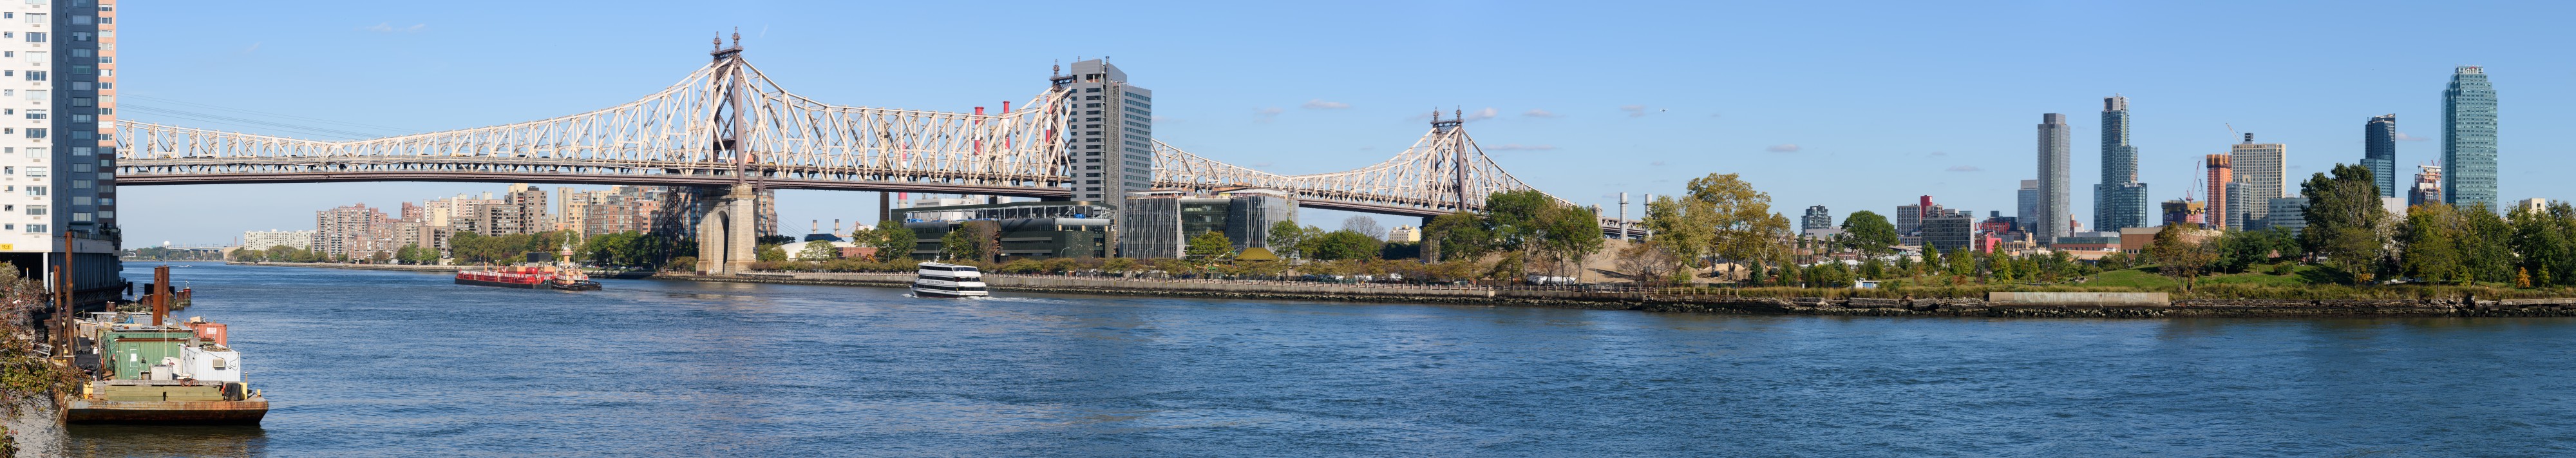 Queensboro Bridge New York October 2016 panorama